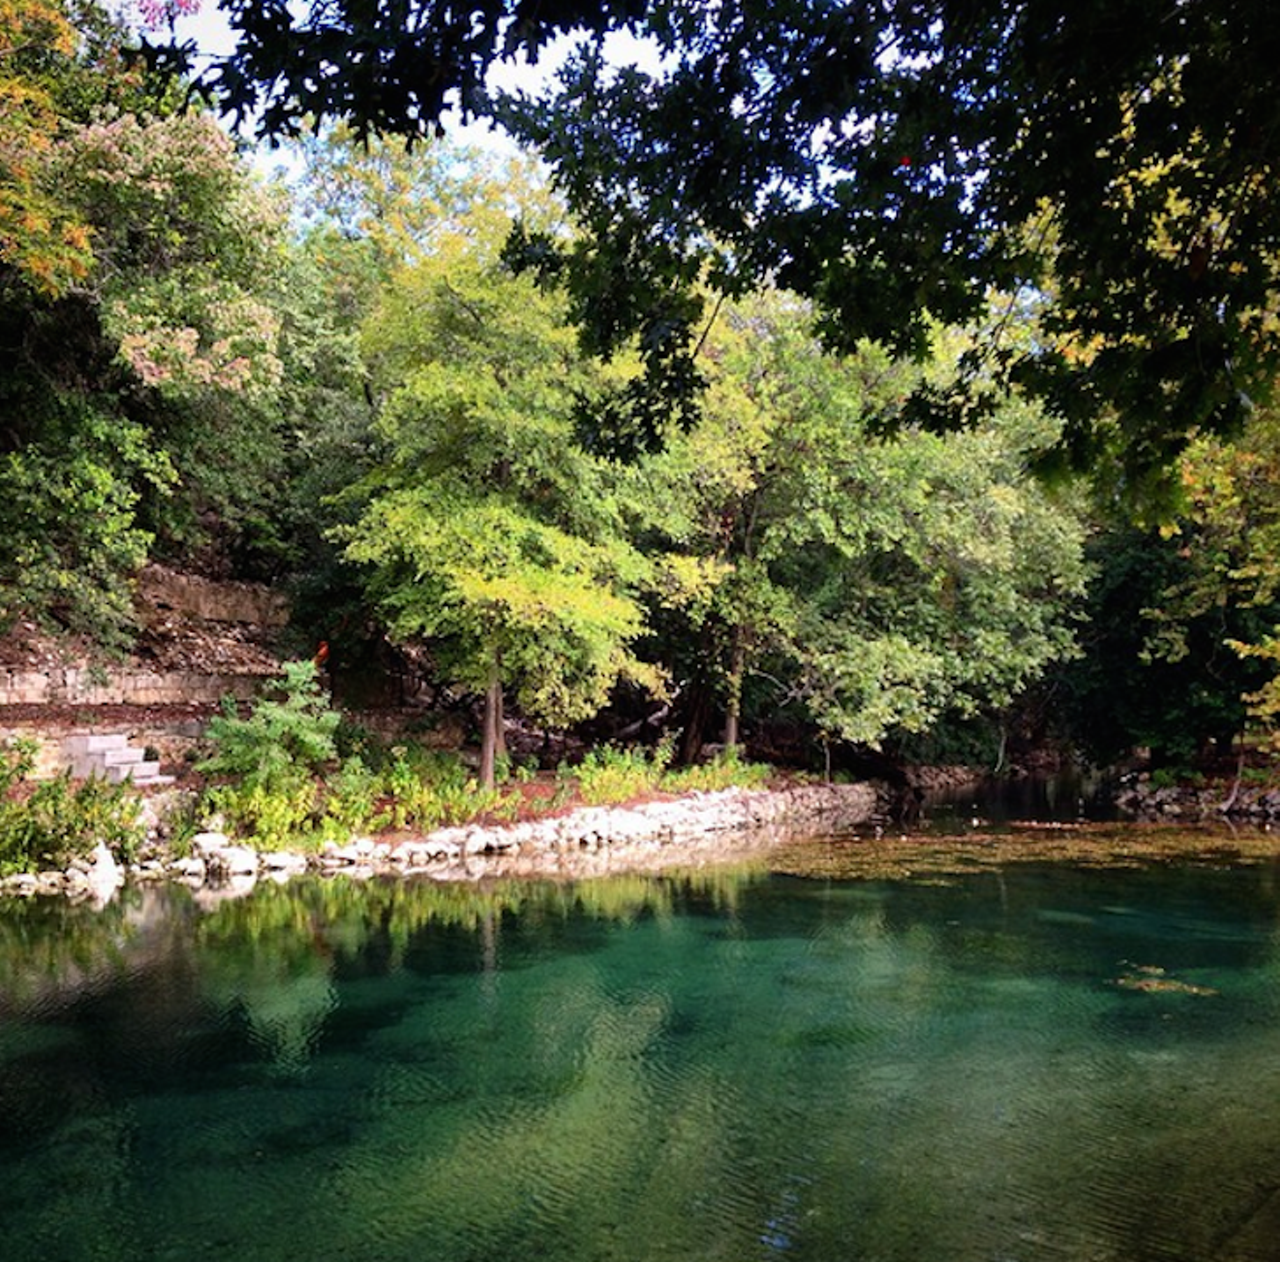 Comal Springs in New Braunfels, Texas  
164 Landa Park Dr, New Braunfels, Texas 78130, (830) 221-4000, nbtexas.org
Comal Springs is the largest group of artisan springs in Texas. 
Photo via Instagram (wildventurer)